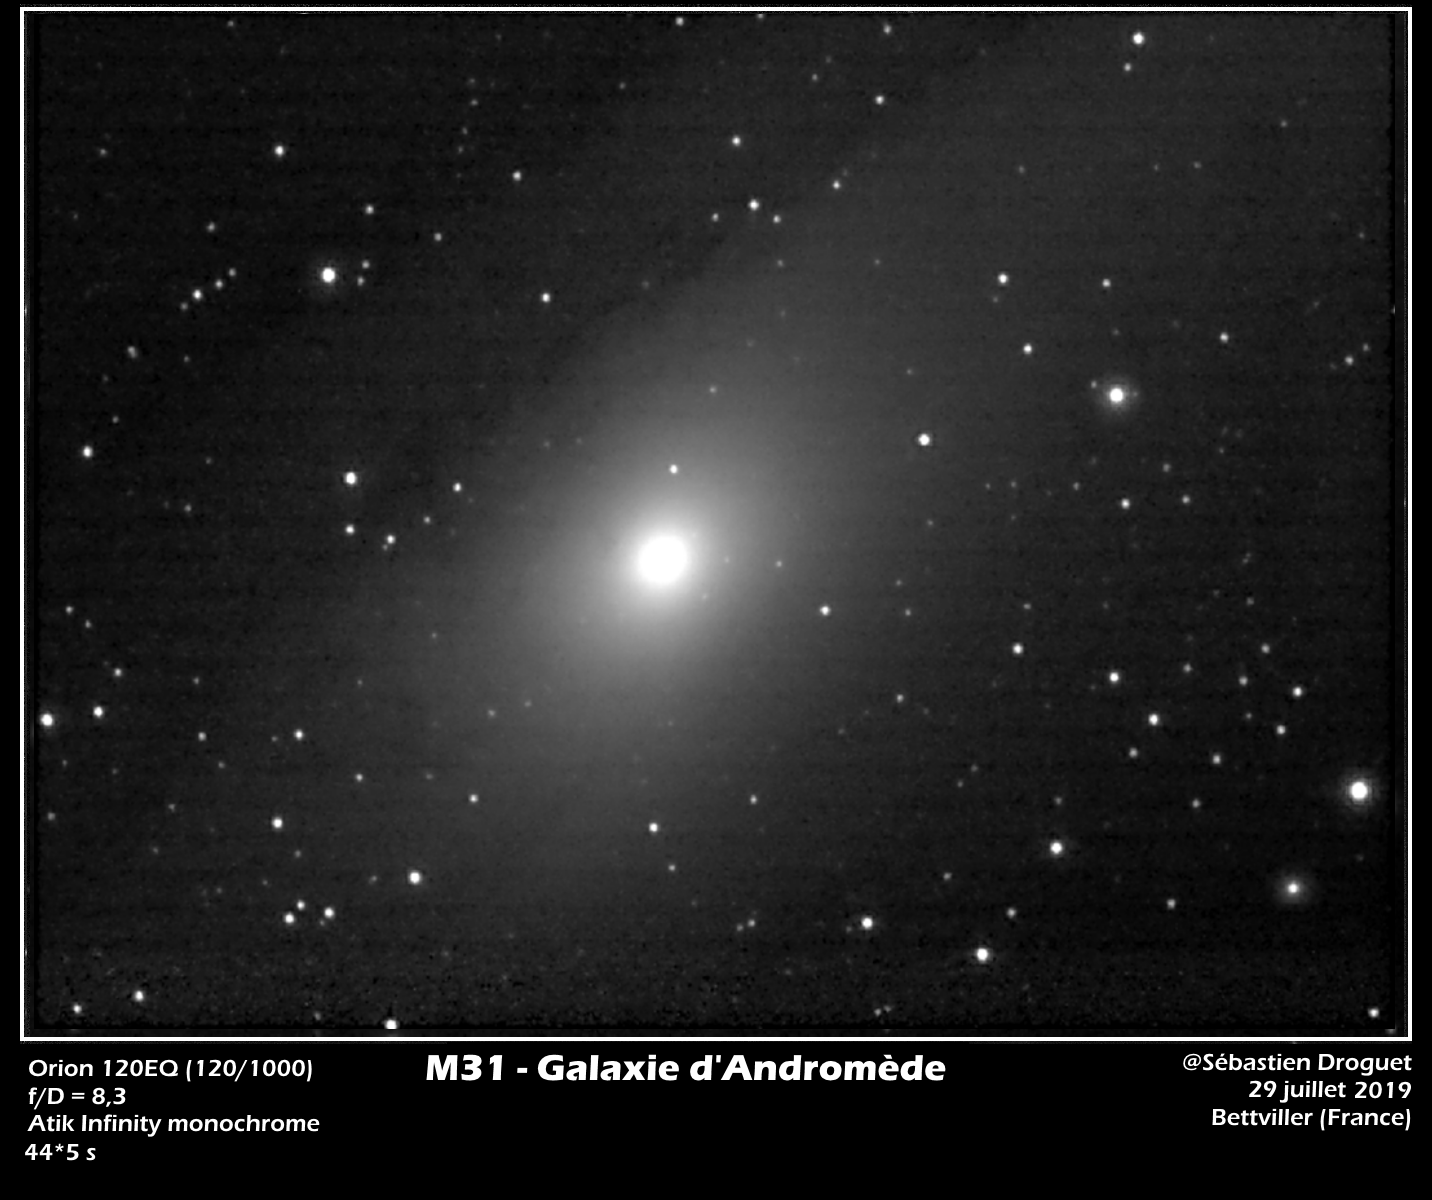 M31 (NGC 224) la galaxie d'Andromède